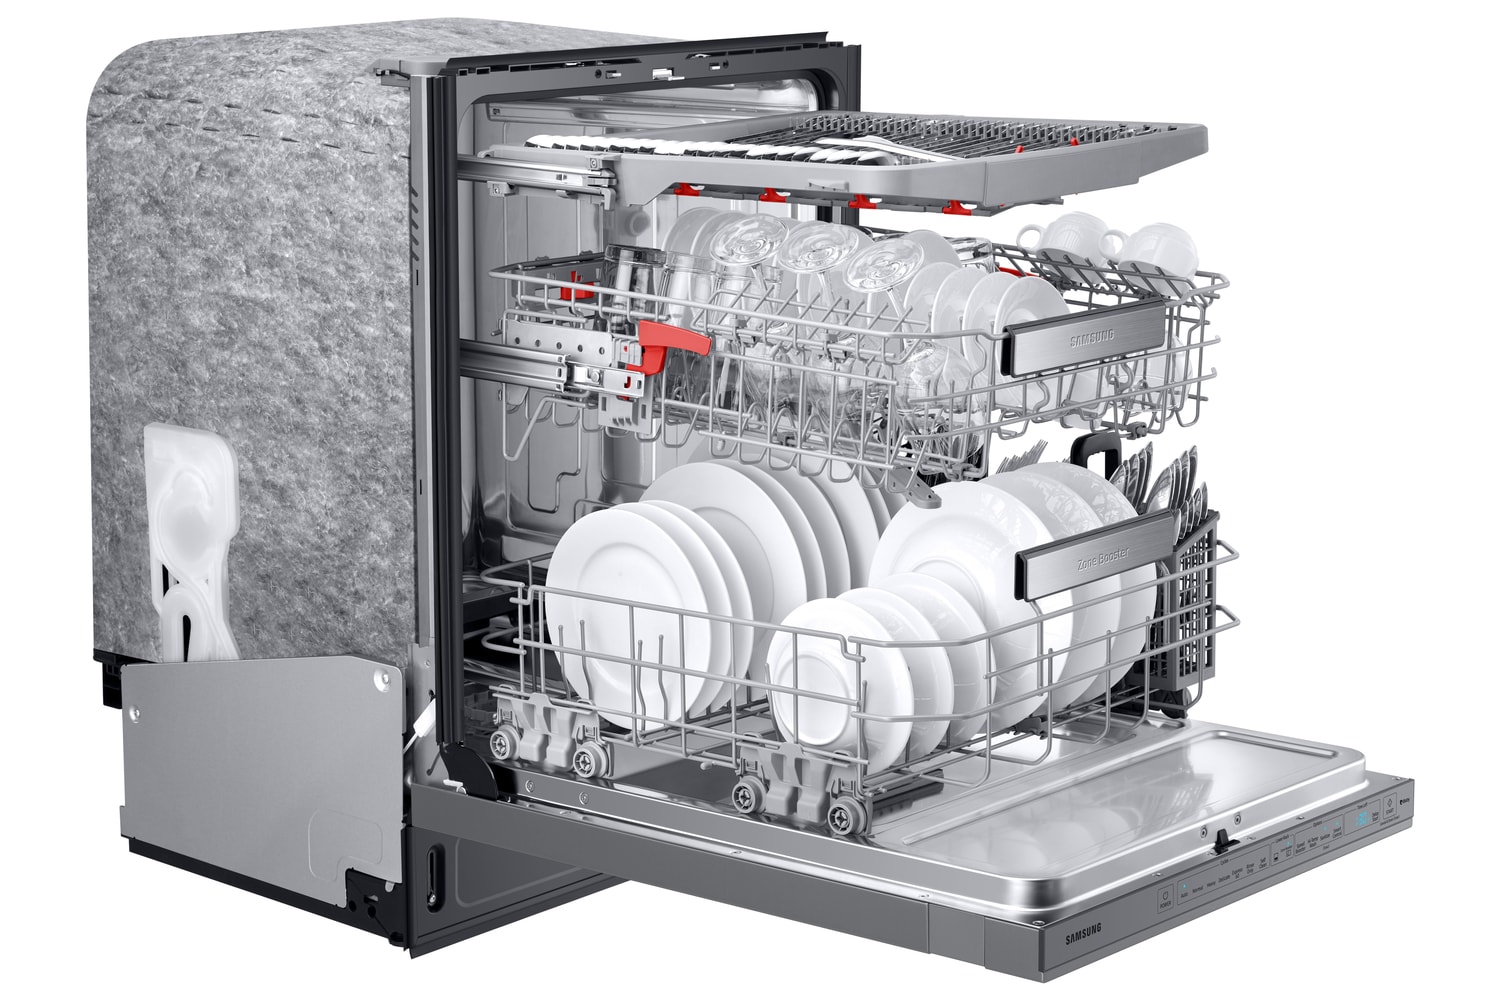 SAMSUNG DW80R9950US Smart Linear Wash 39dBA Dishwasher in Stainless Steel